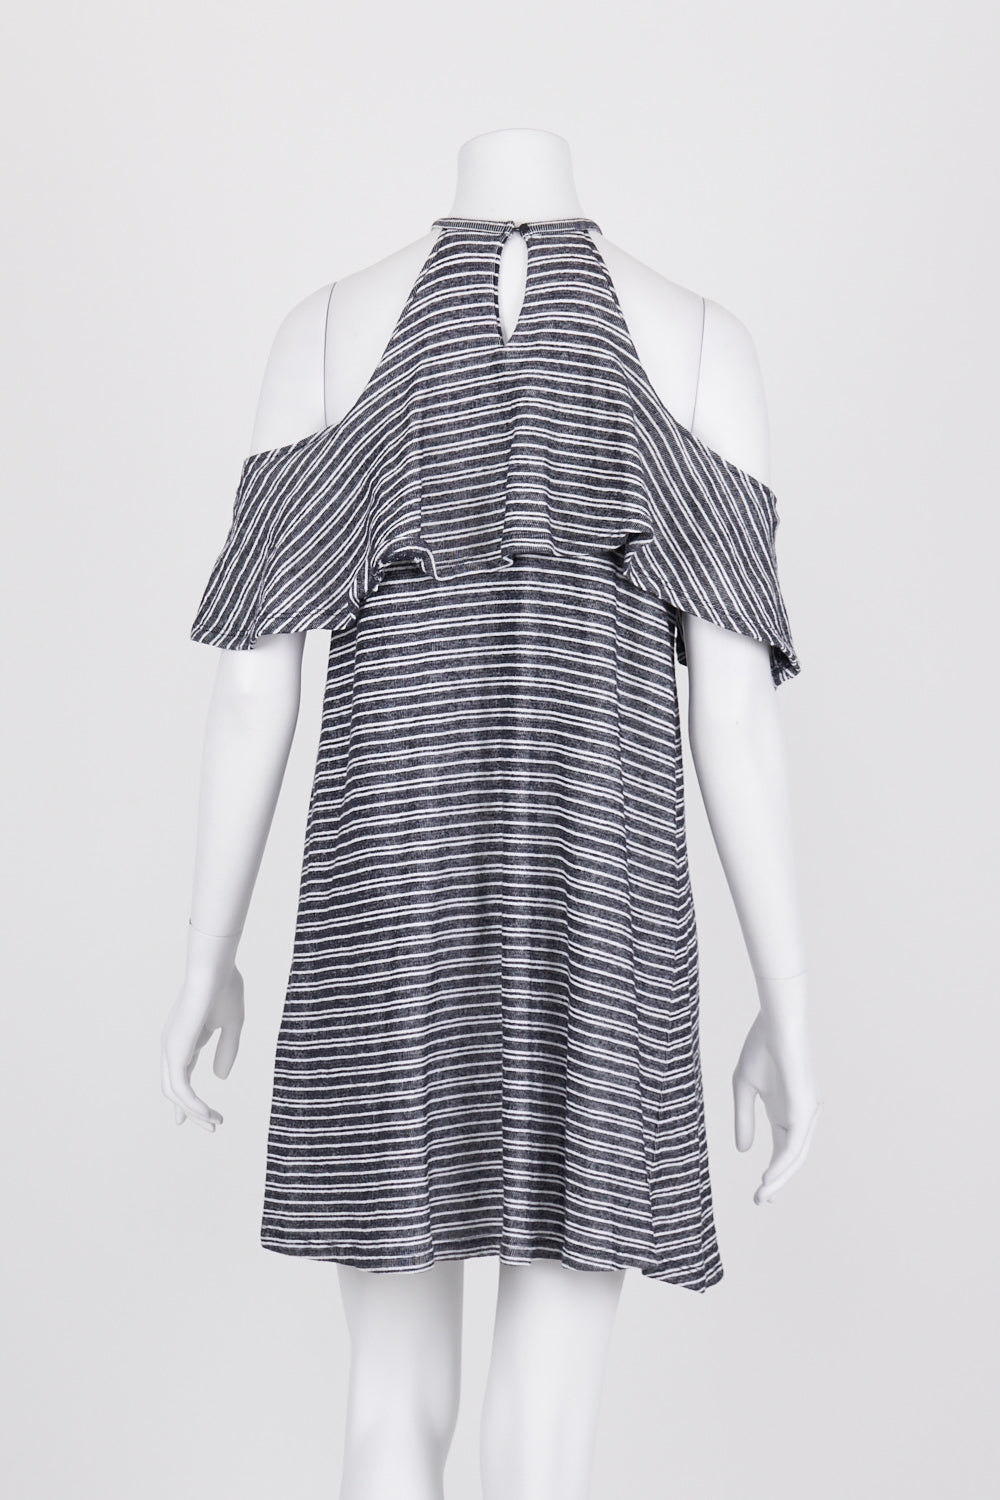 Seed Black and White Striped Ruffle Dress XS